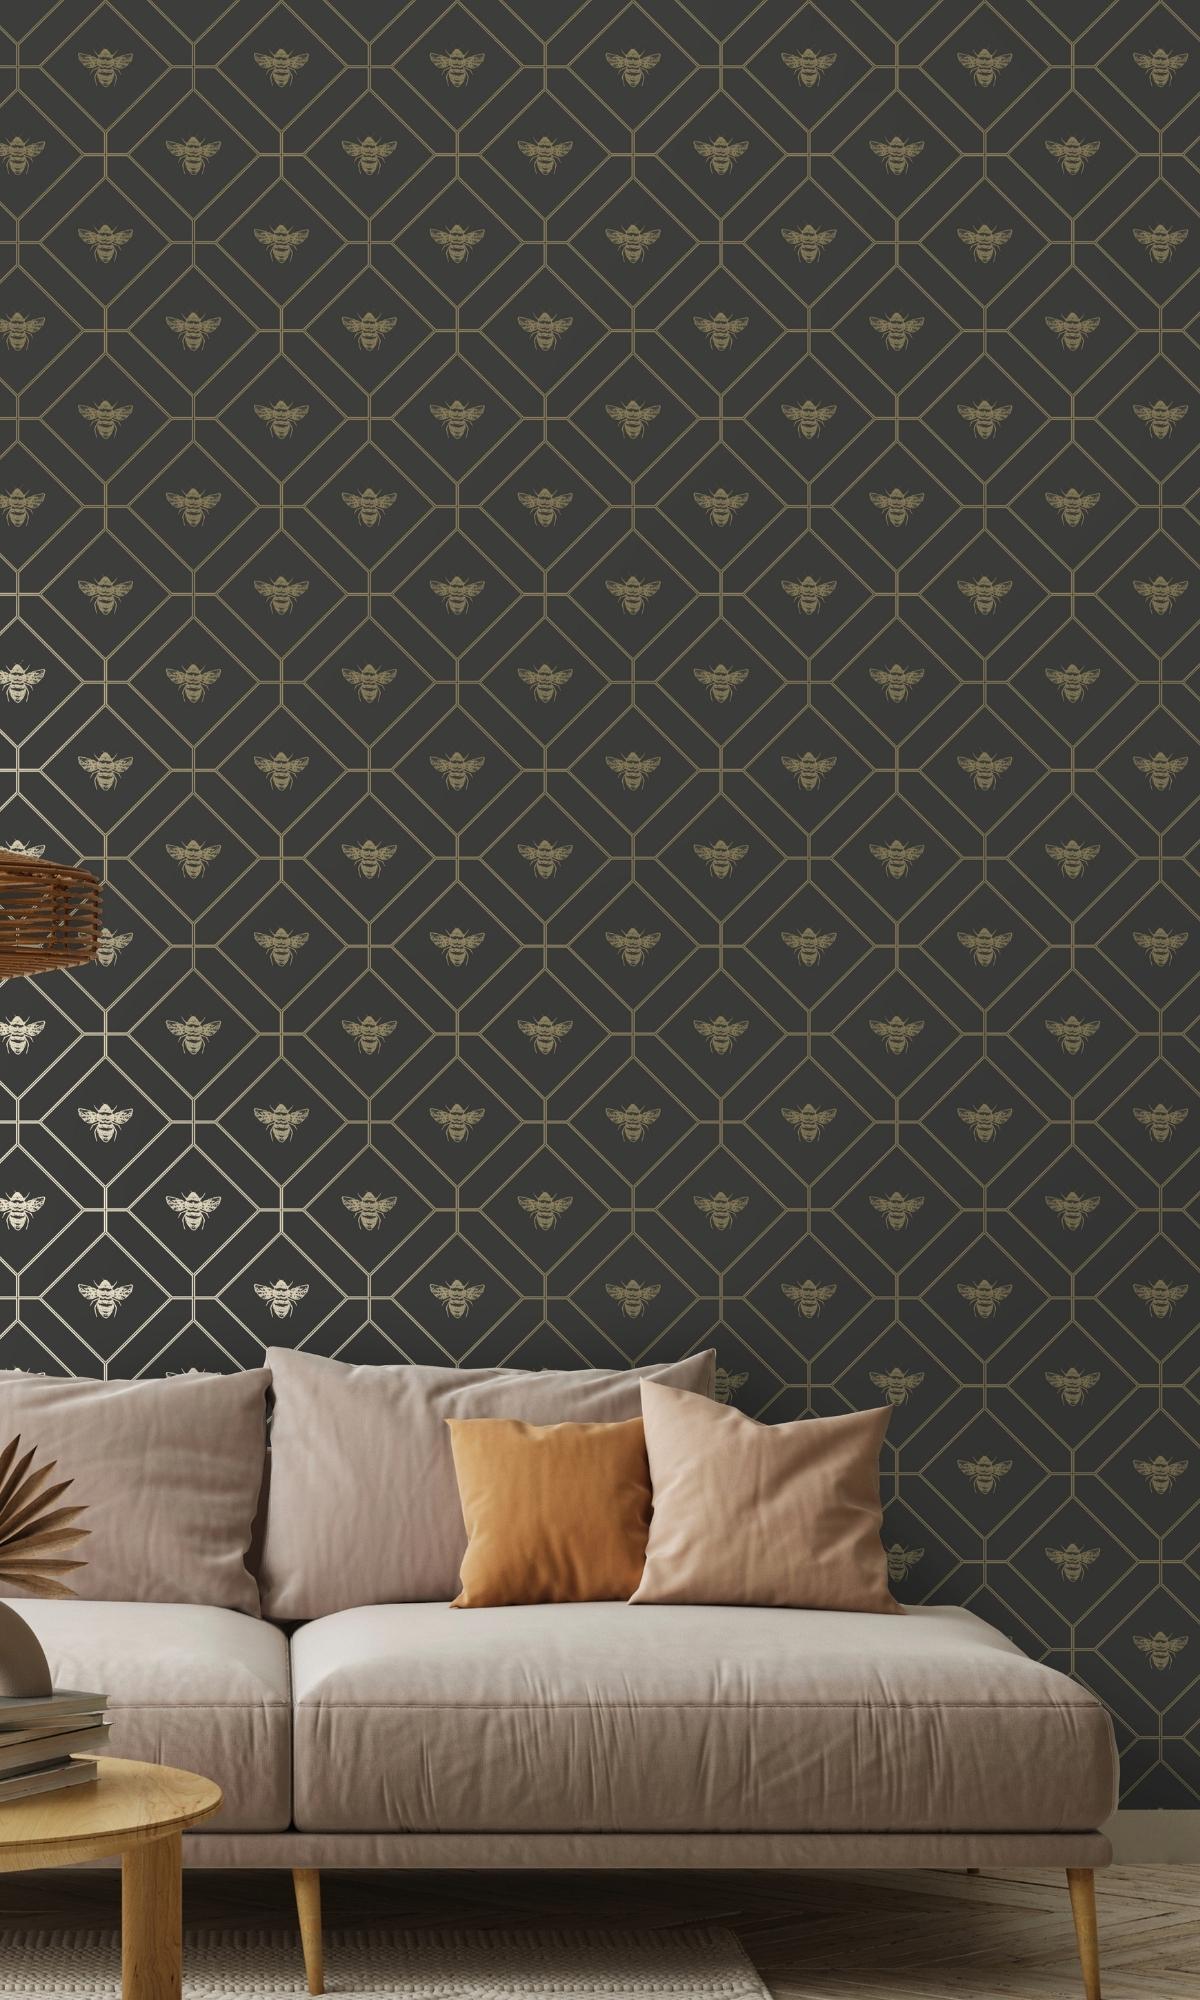 Charcoal & Gold Honey Comb in Geometric Design Wallpaper R7656